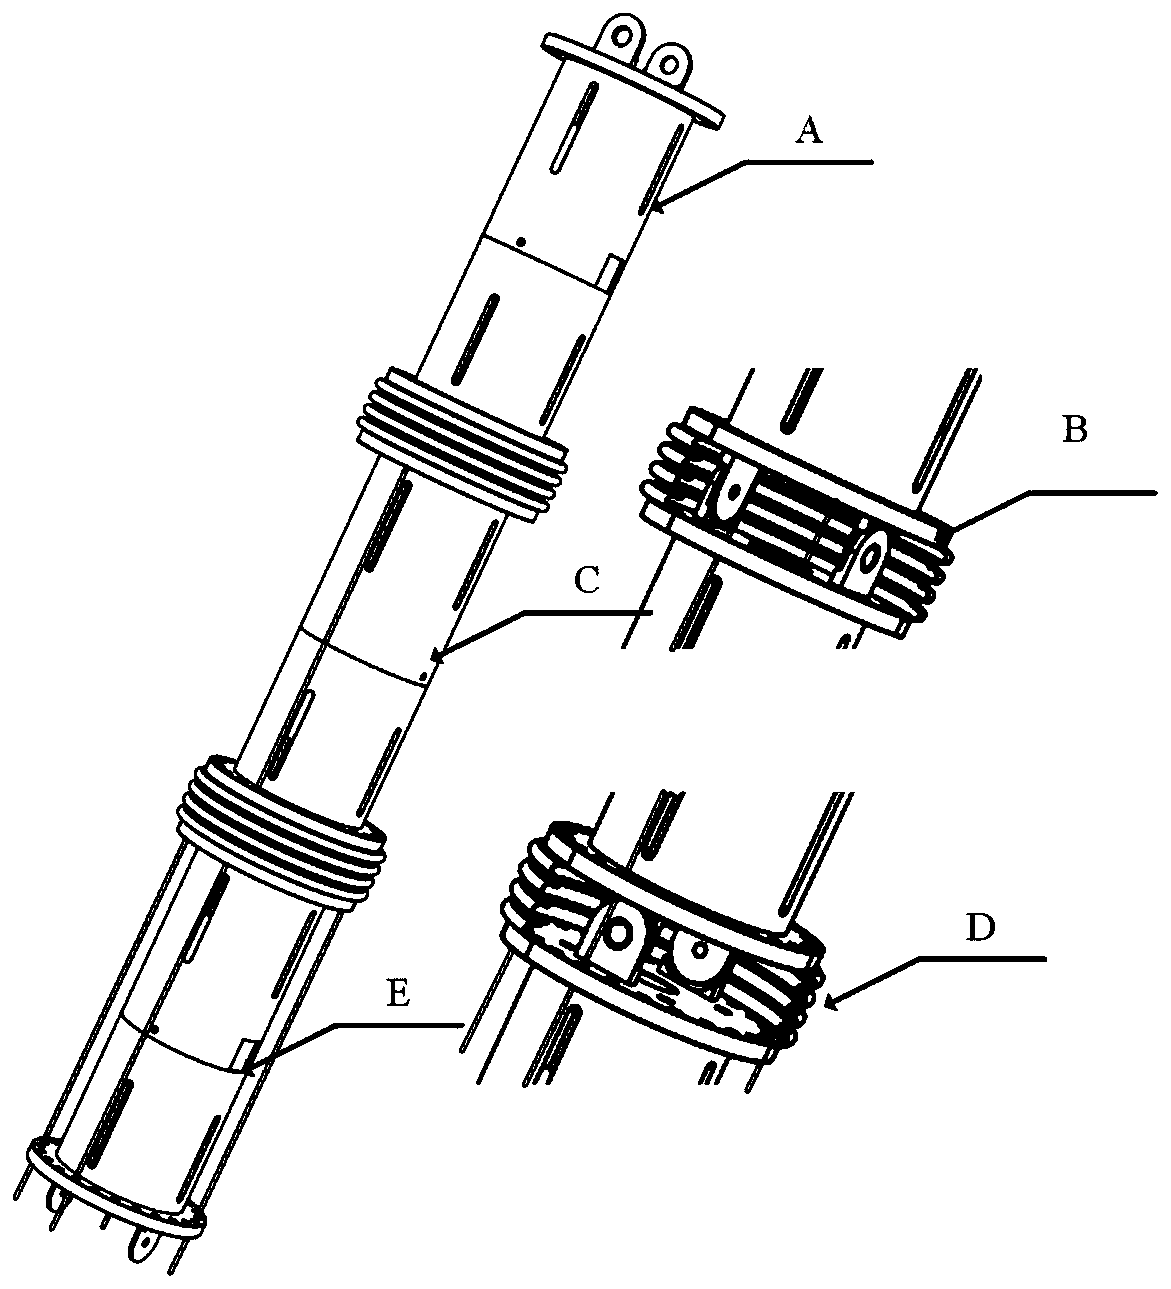 Reconfigurable redundant mechanical arm based on rope driving